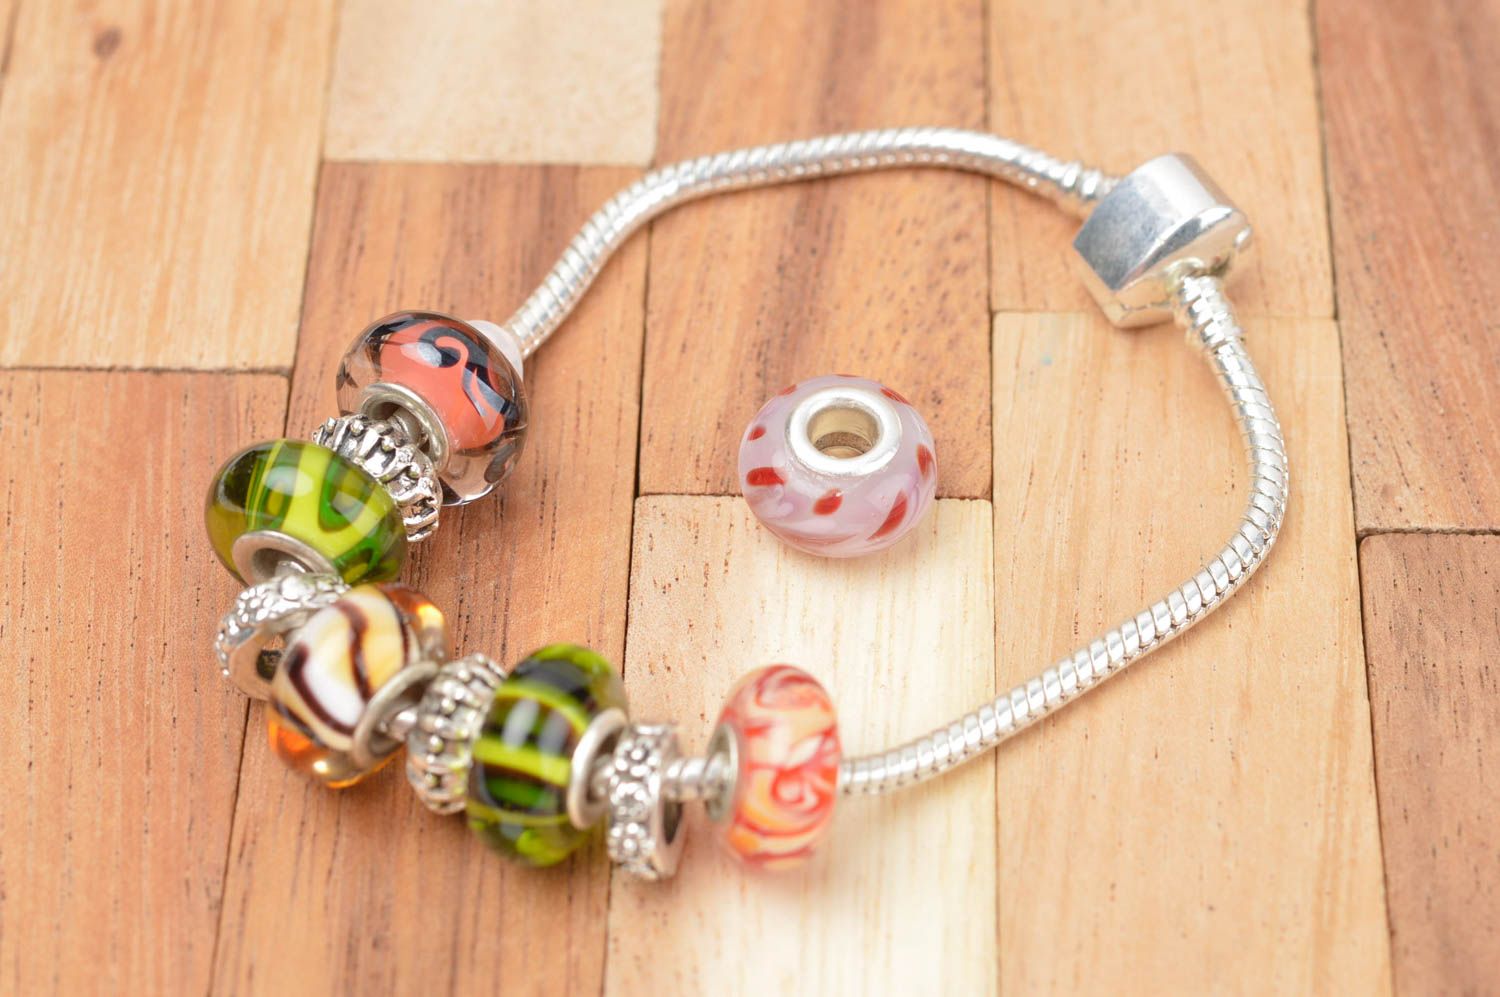 Beautiful handmade glass bead lampwork art jewelry making supplies gifts for her photo 3